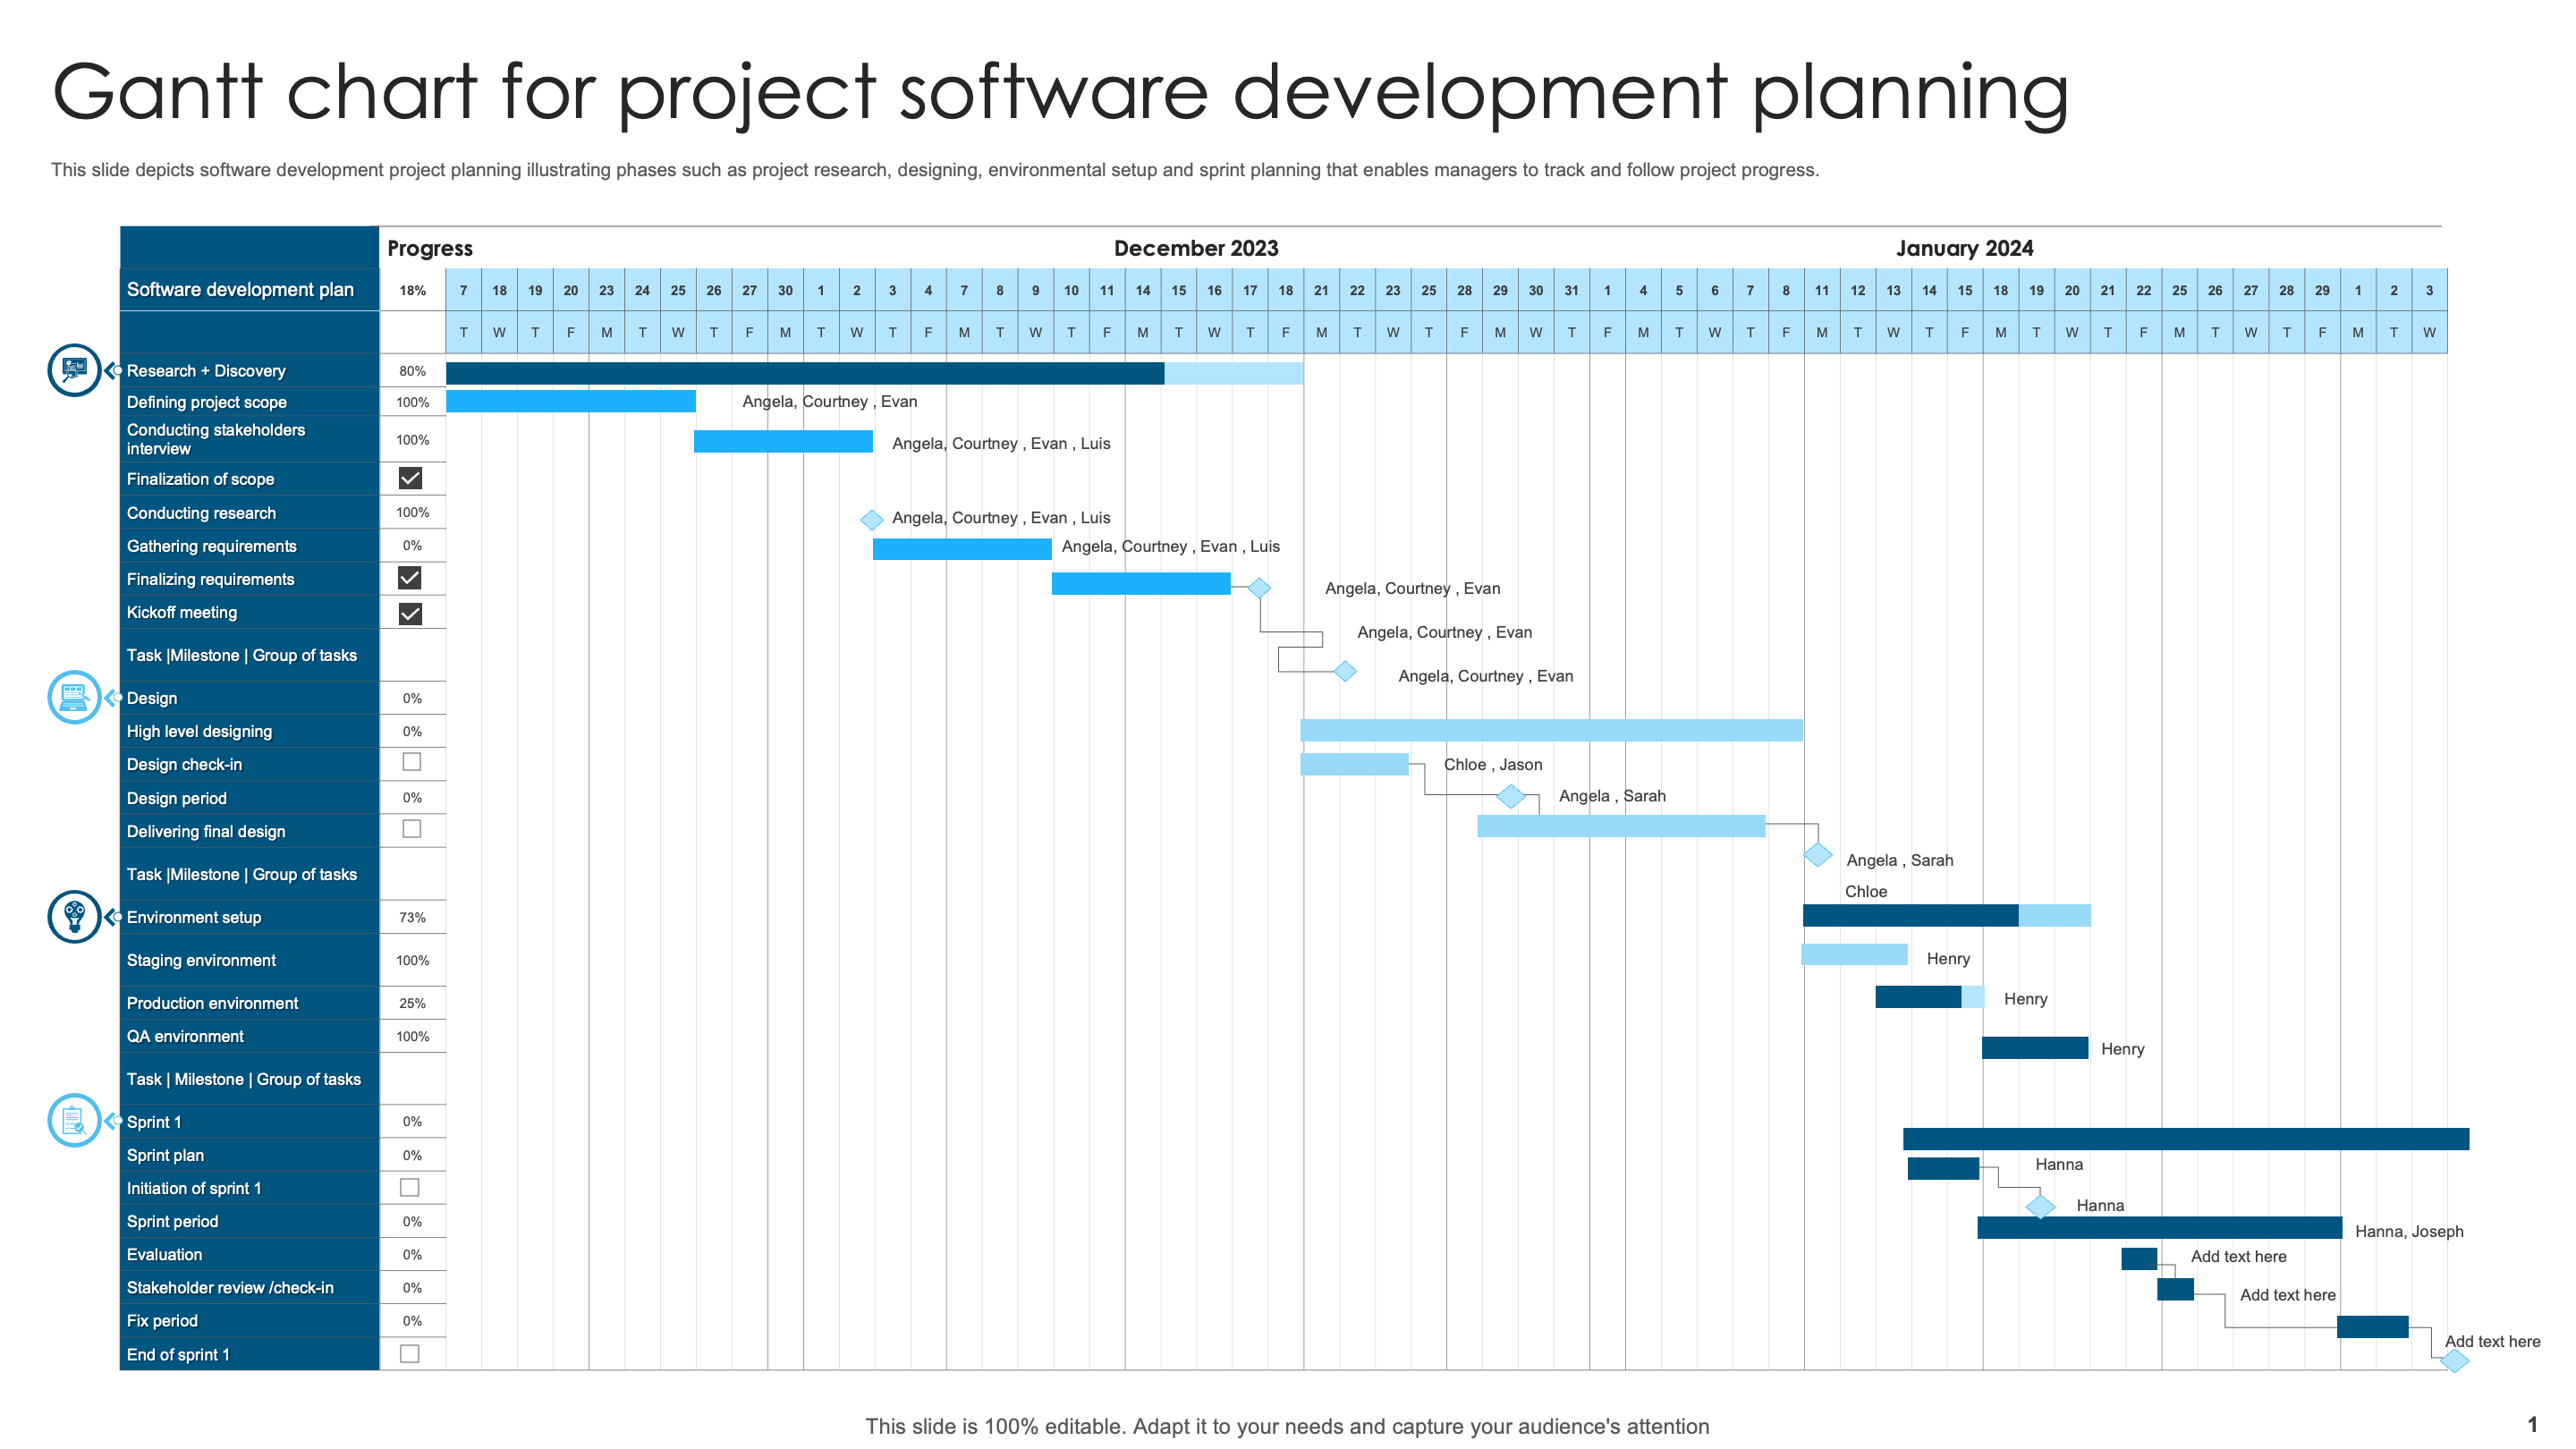 Preparing Gantt Chart for Project Software Development Planning